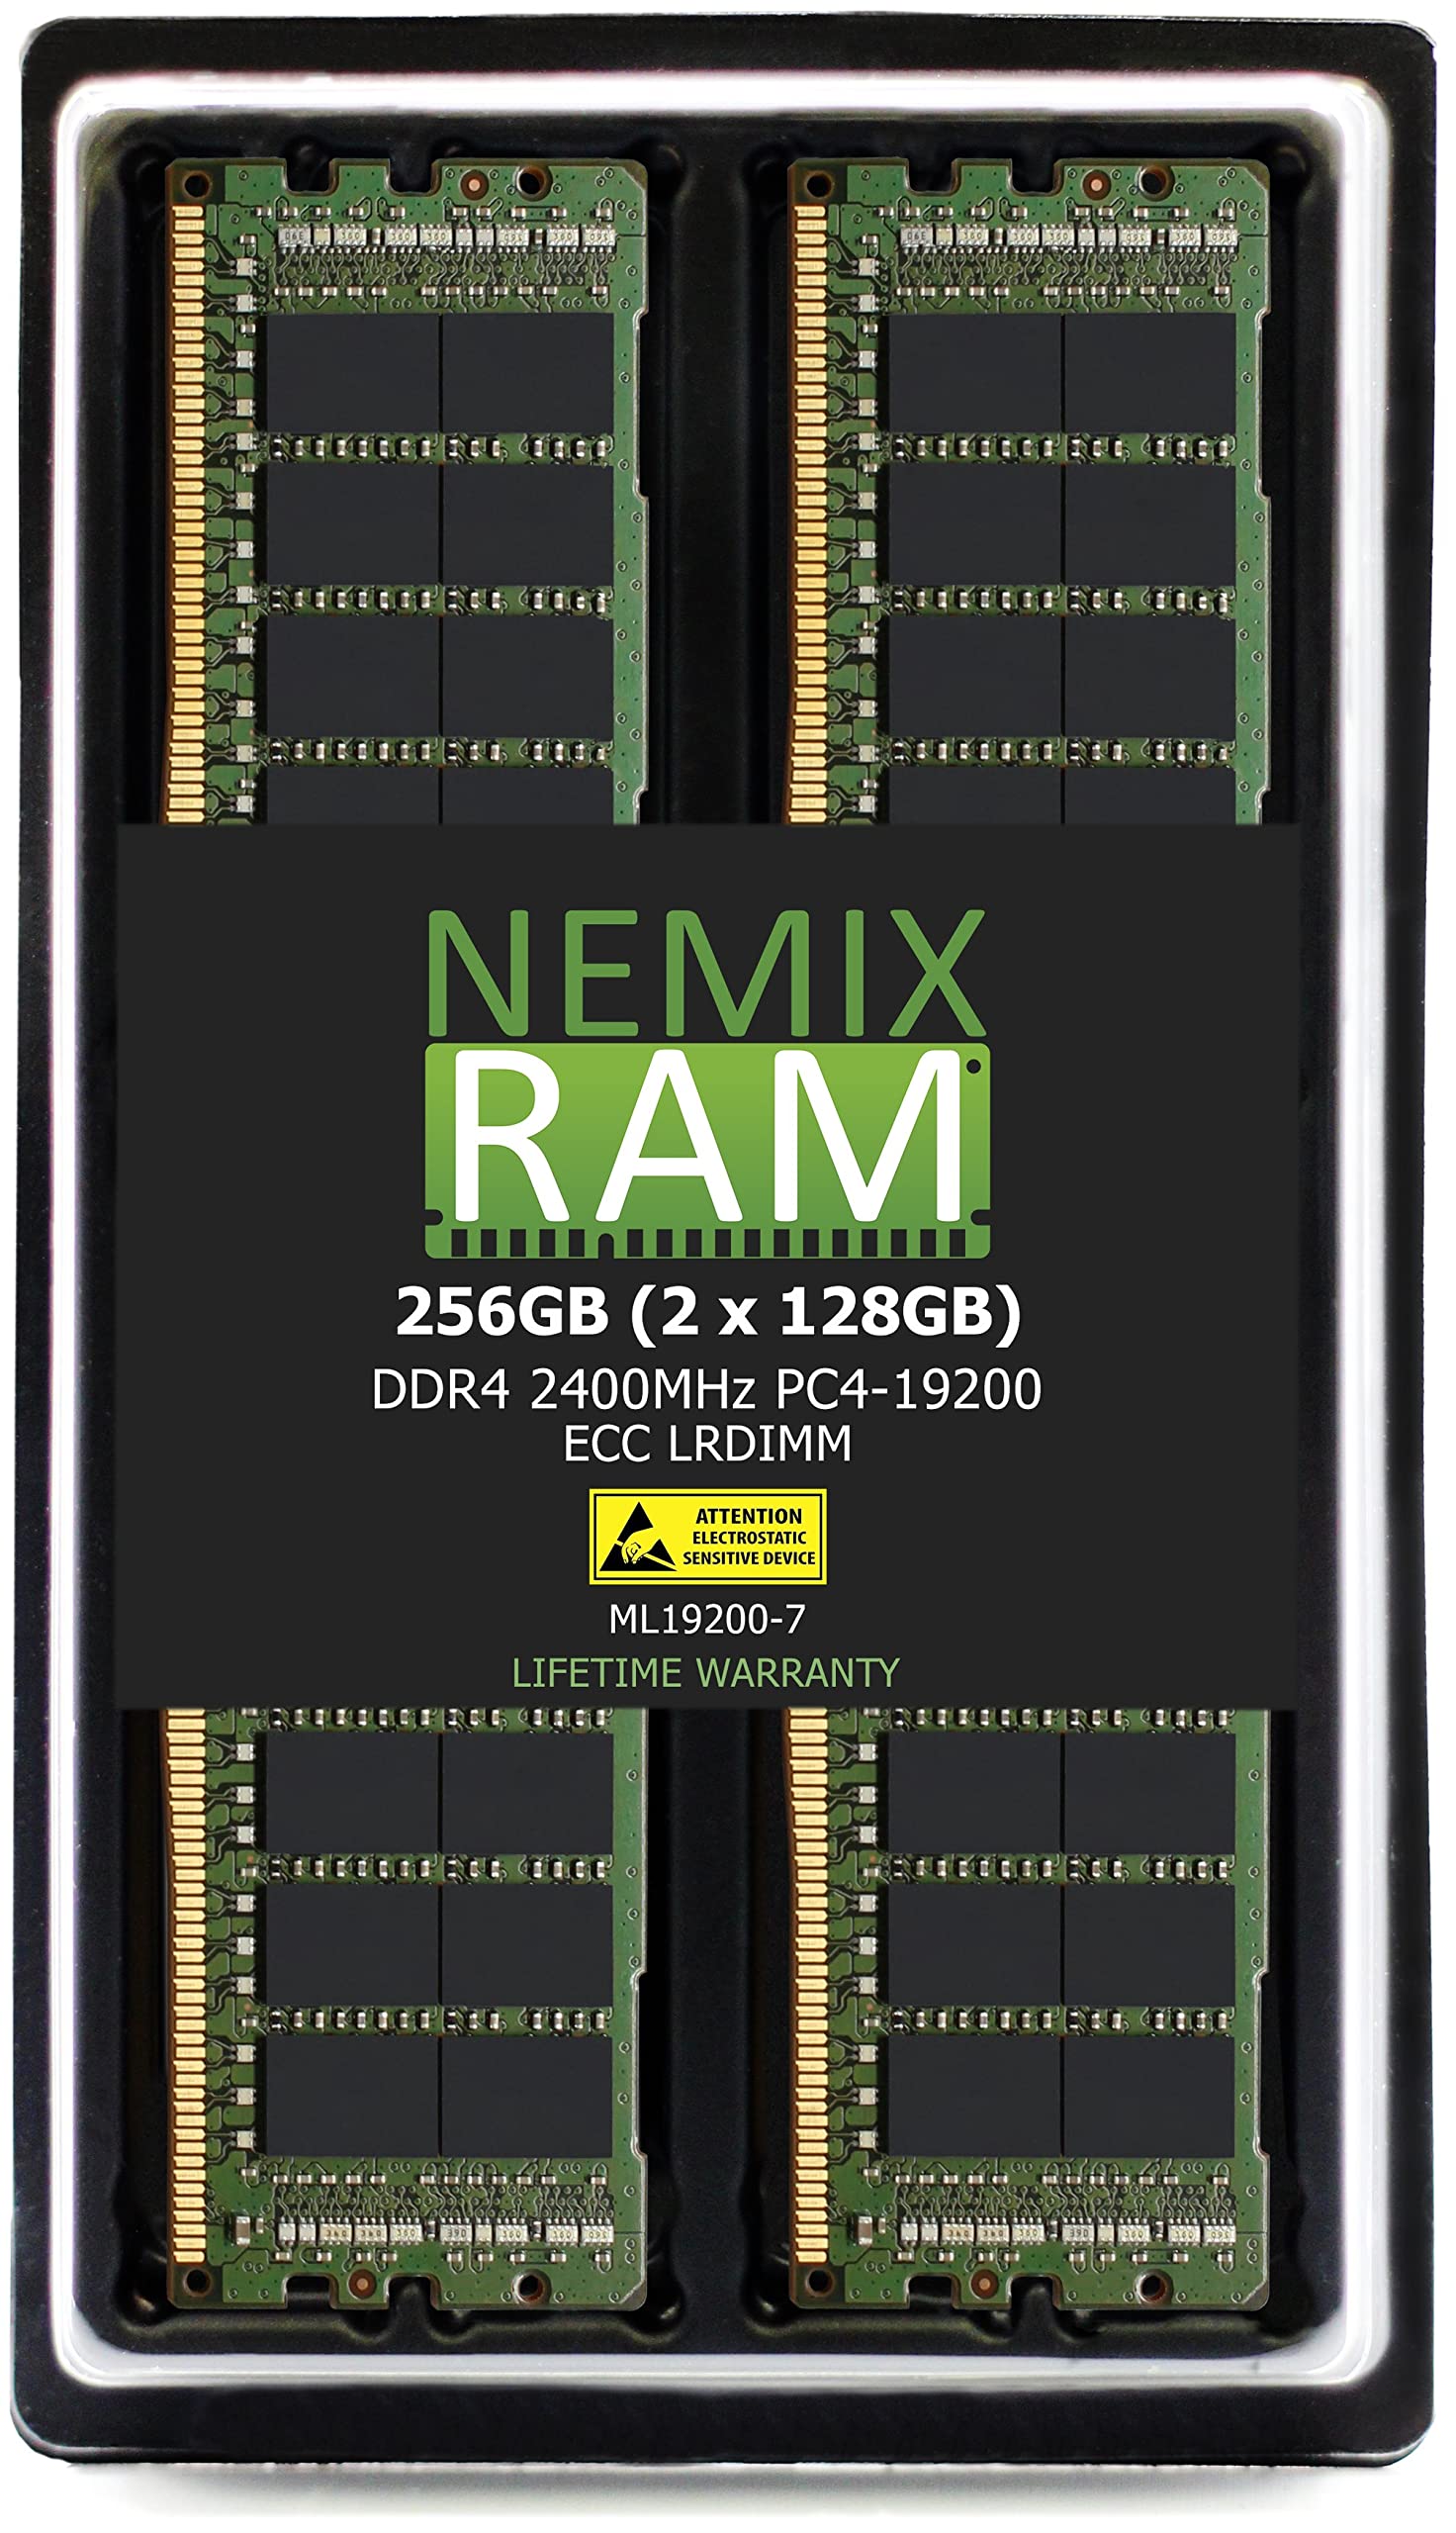 256GB 2x128GB DDR4-2400 LRDIMM 8Rx4 Memory for ASUS KNPA-U16 AMD EPYC 7000 Series by Nemix Ram